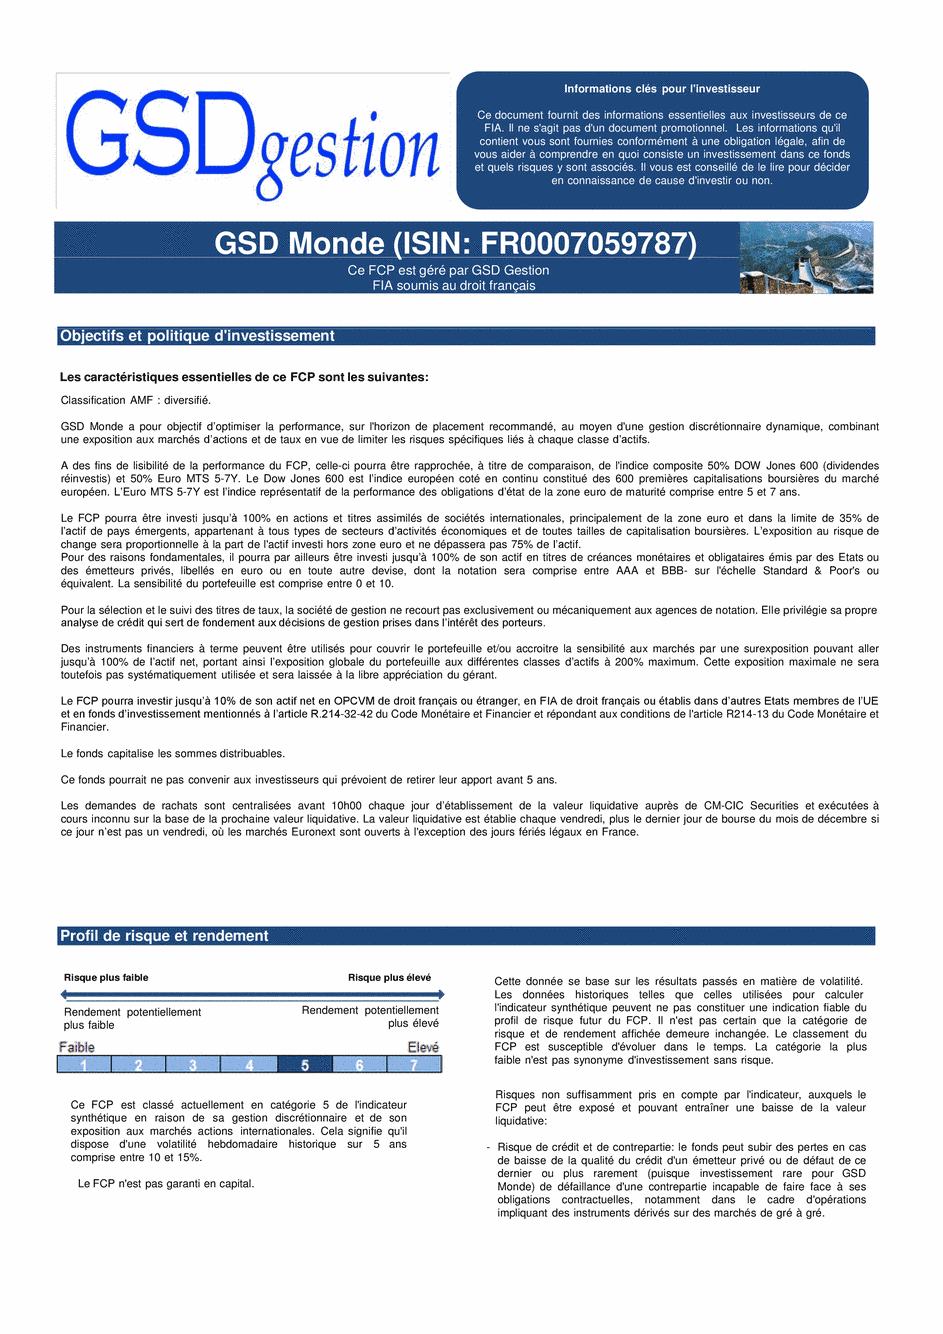 DICI-Prospectus GSD Monde - 06/02/2015 - French